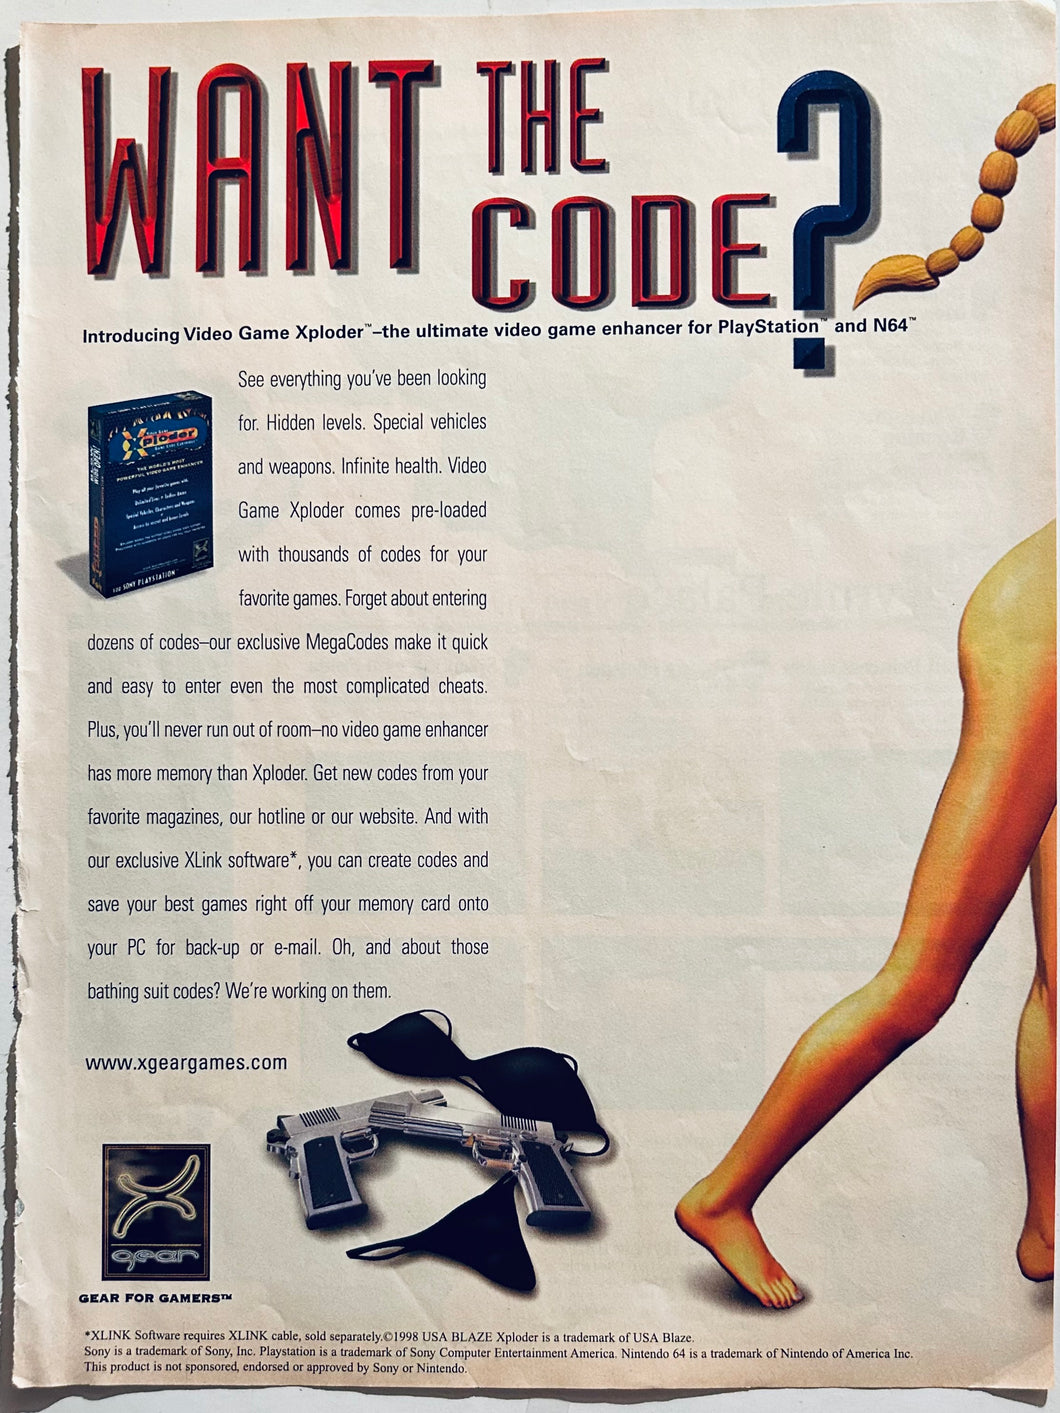 Video Game Xploder - PlayStation N64 - Original Vintage Advertisement - Print Ads - Laminated A4 Poster